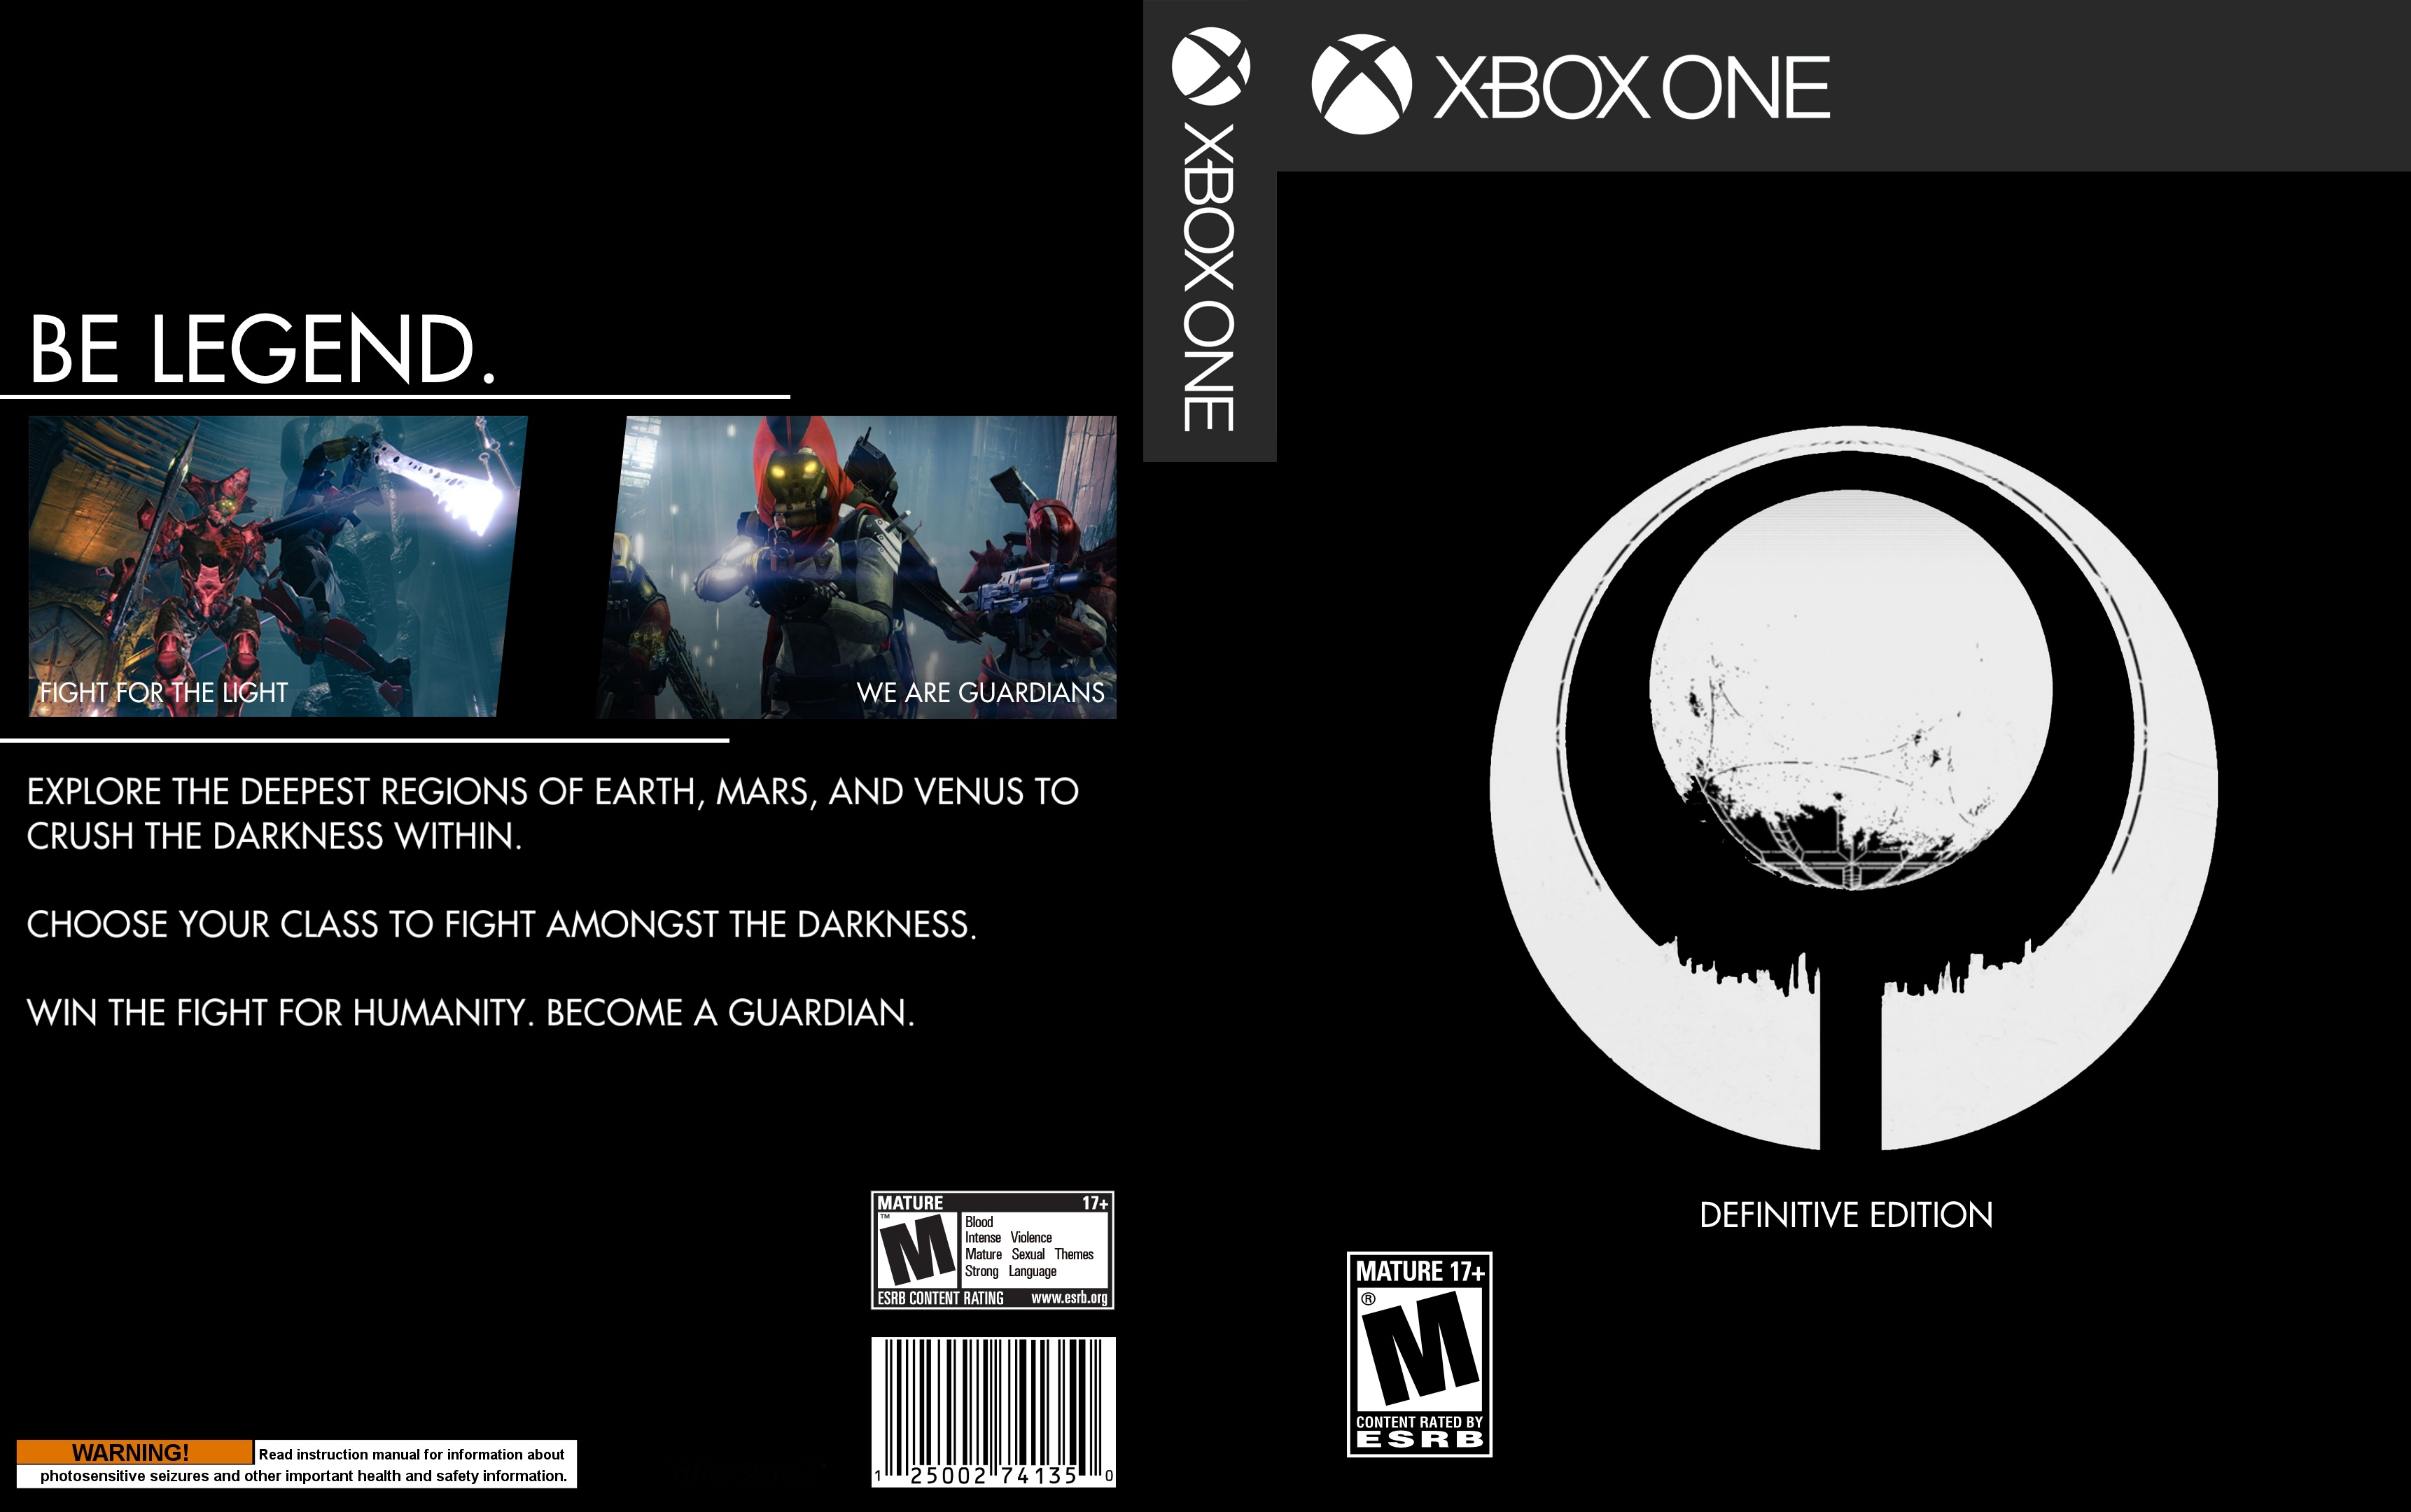 Destiny: The Definitive Edition box cover